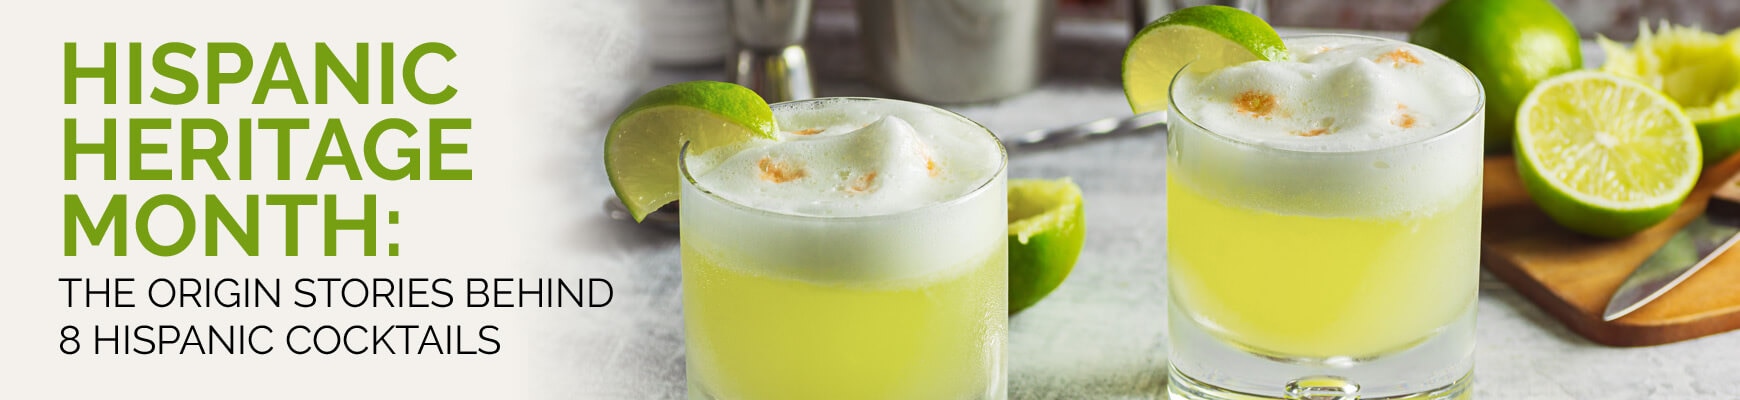 Hispanic Heritage Month: The Original Story Behind 8 Hispanic Cocktails